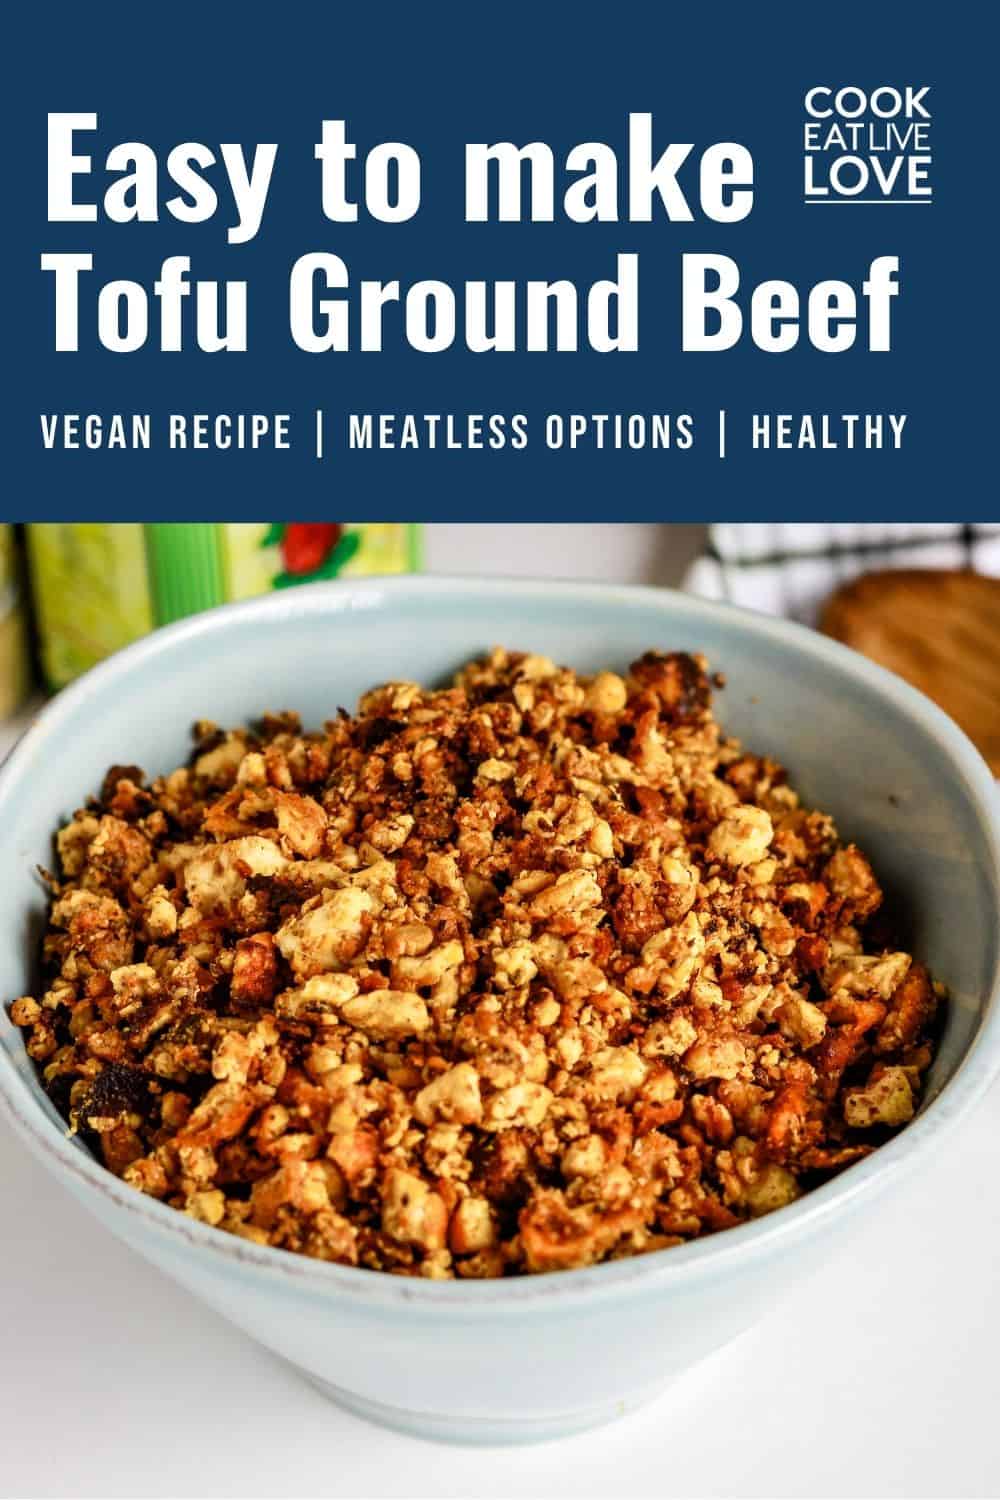 Easy Tofu Ground Beef (Tofu Crumbles) - Cook Eat Live Love